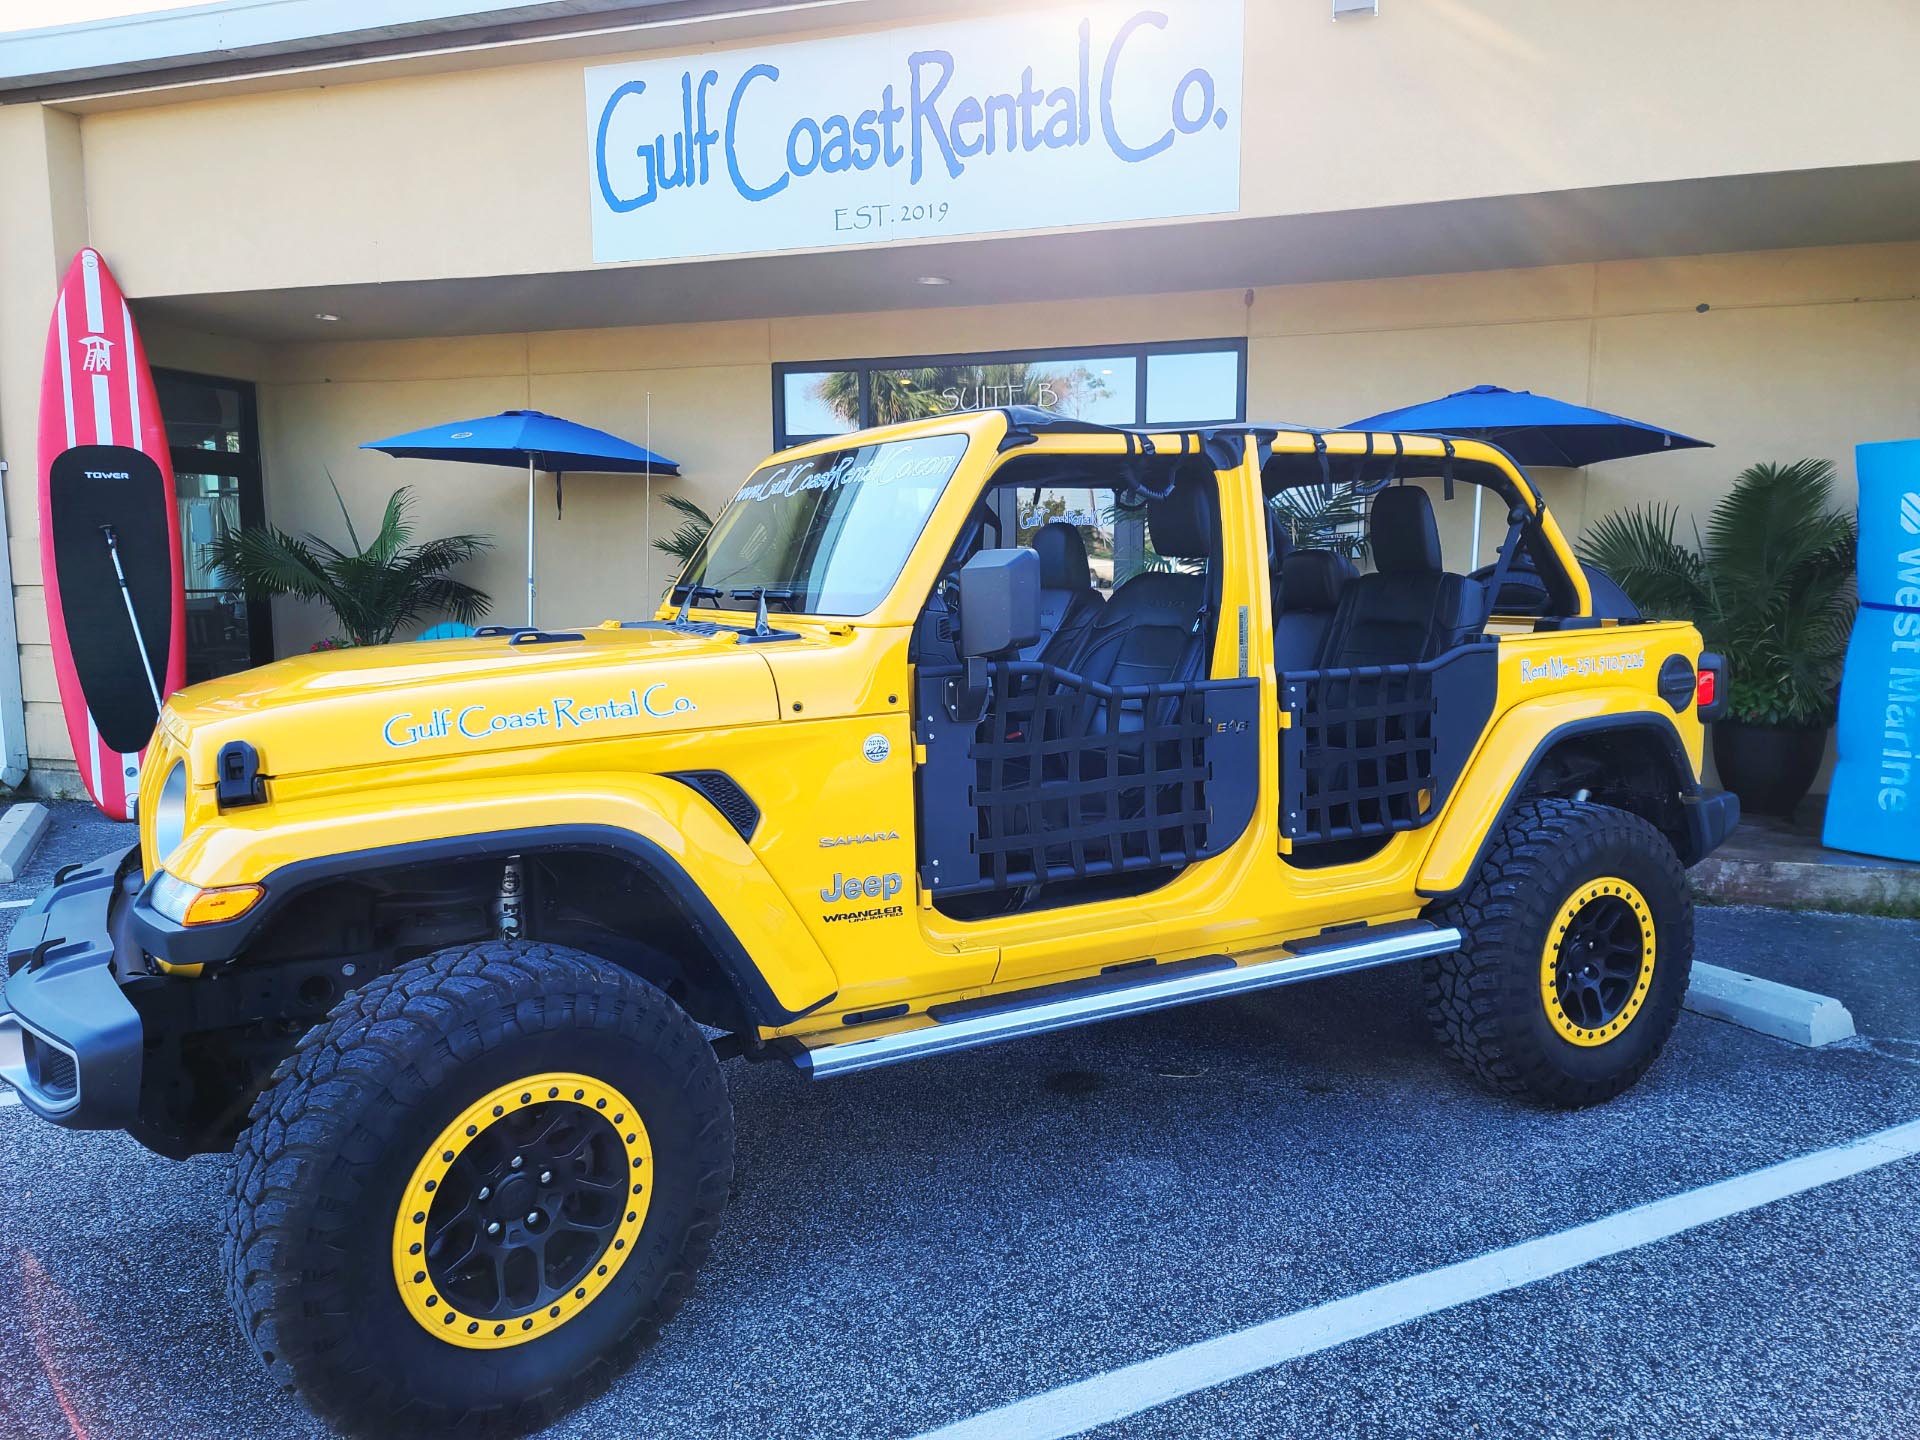 Weekly Jeep Rental - Gulf Coast Rental Co.